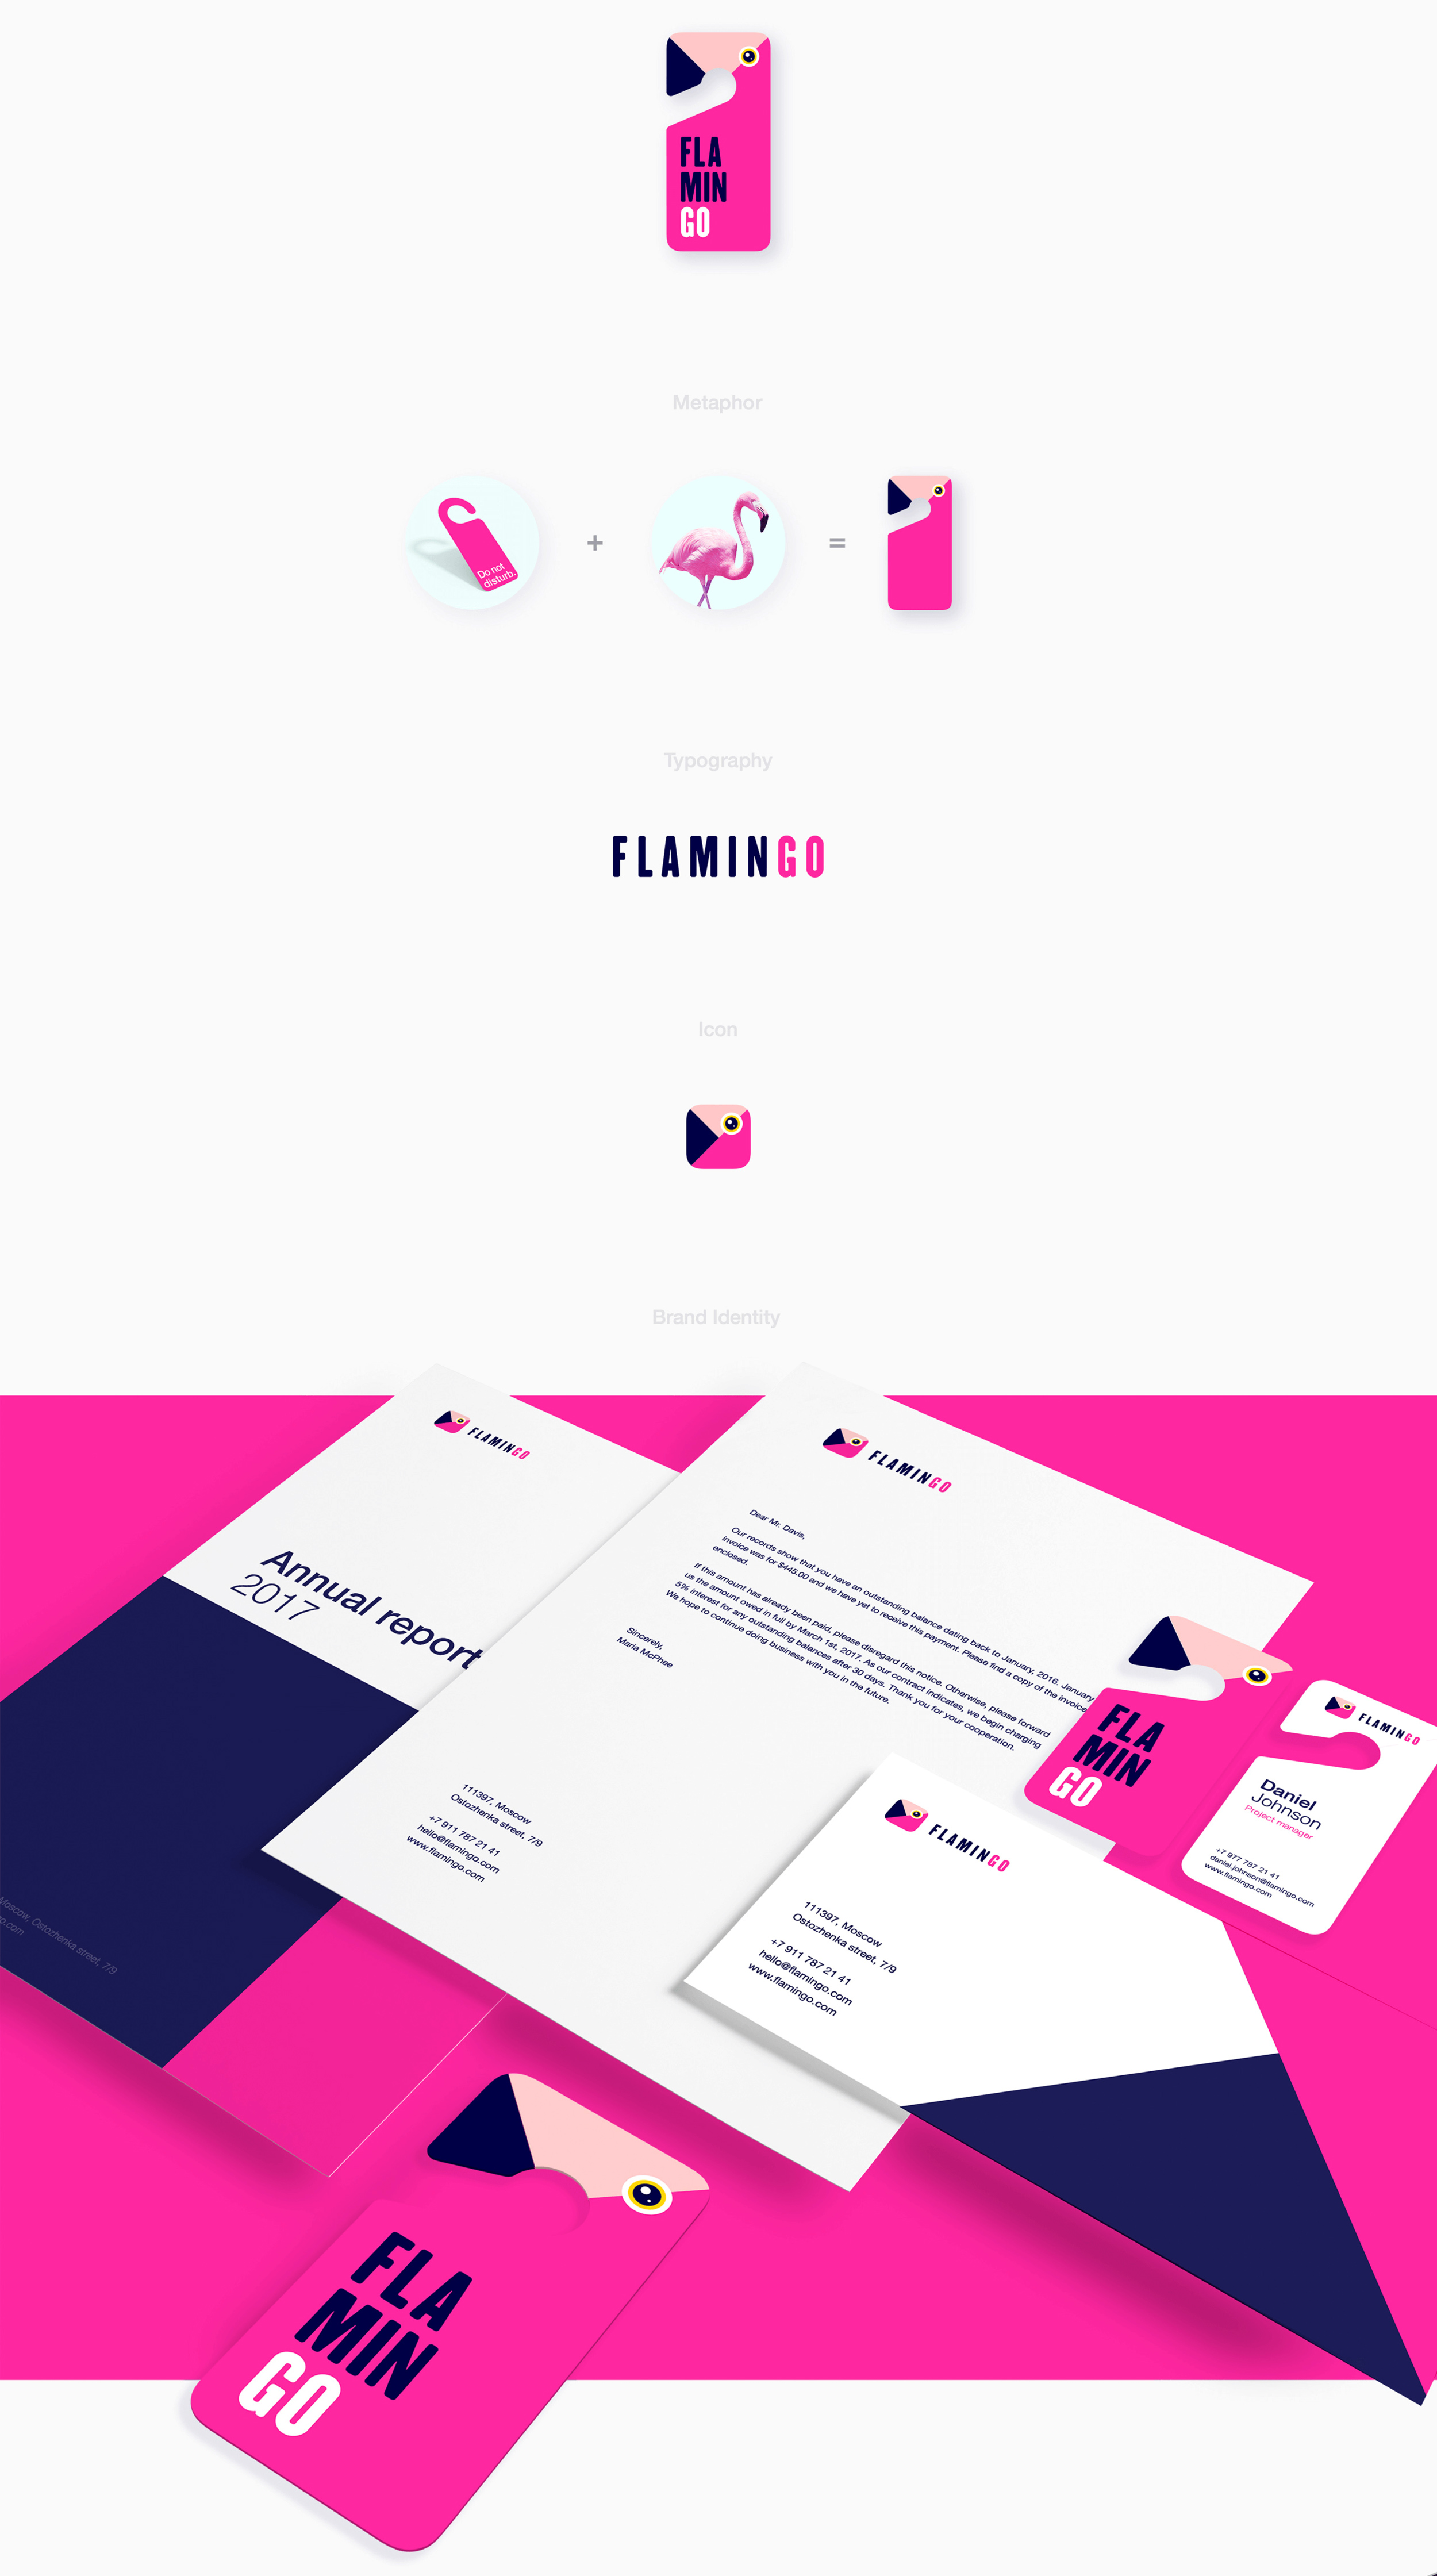 flamingo_1.jpg